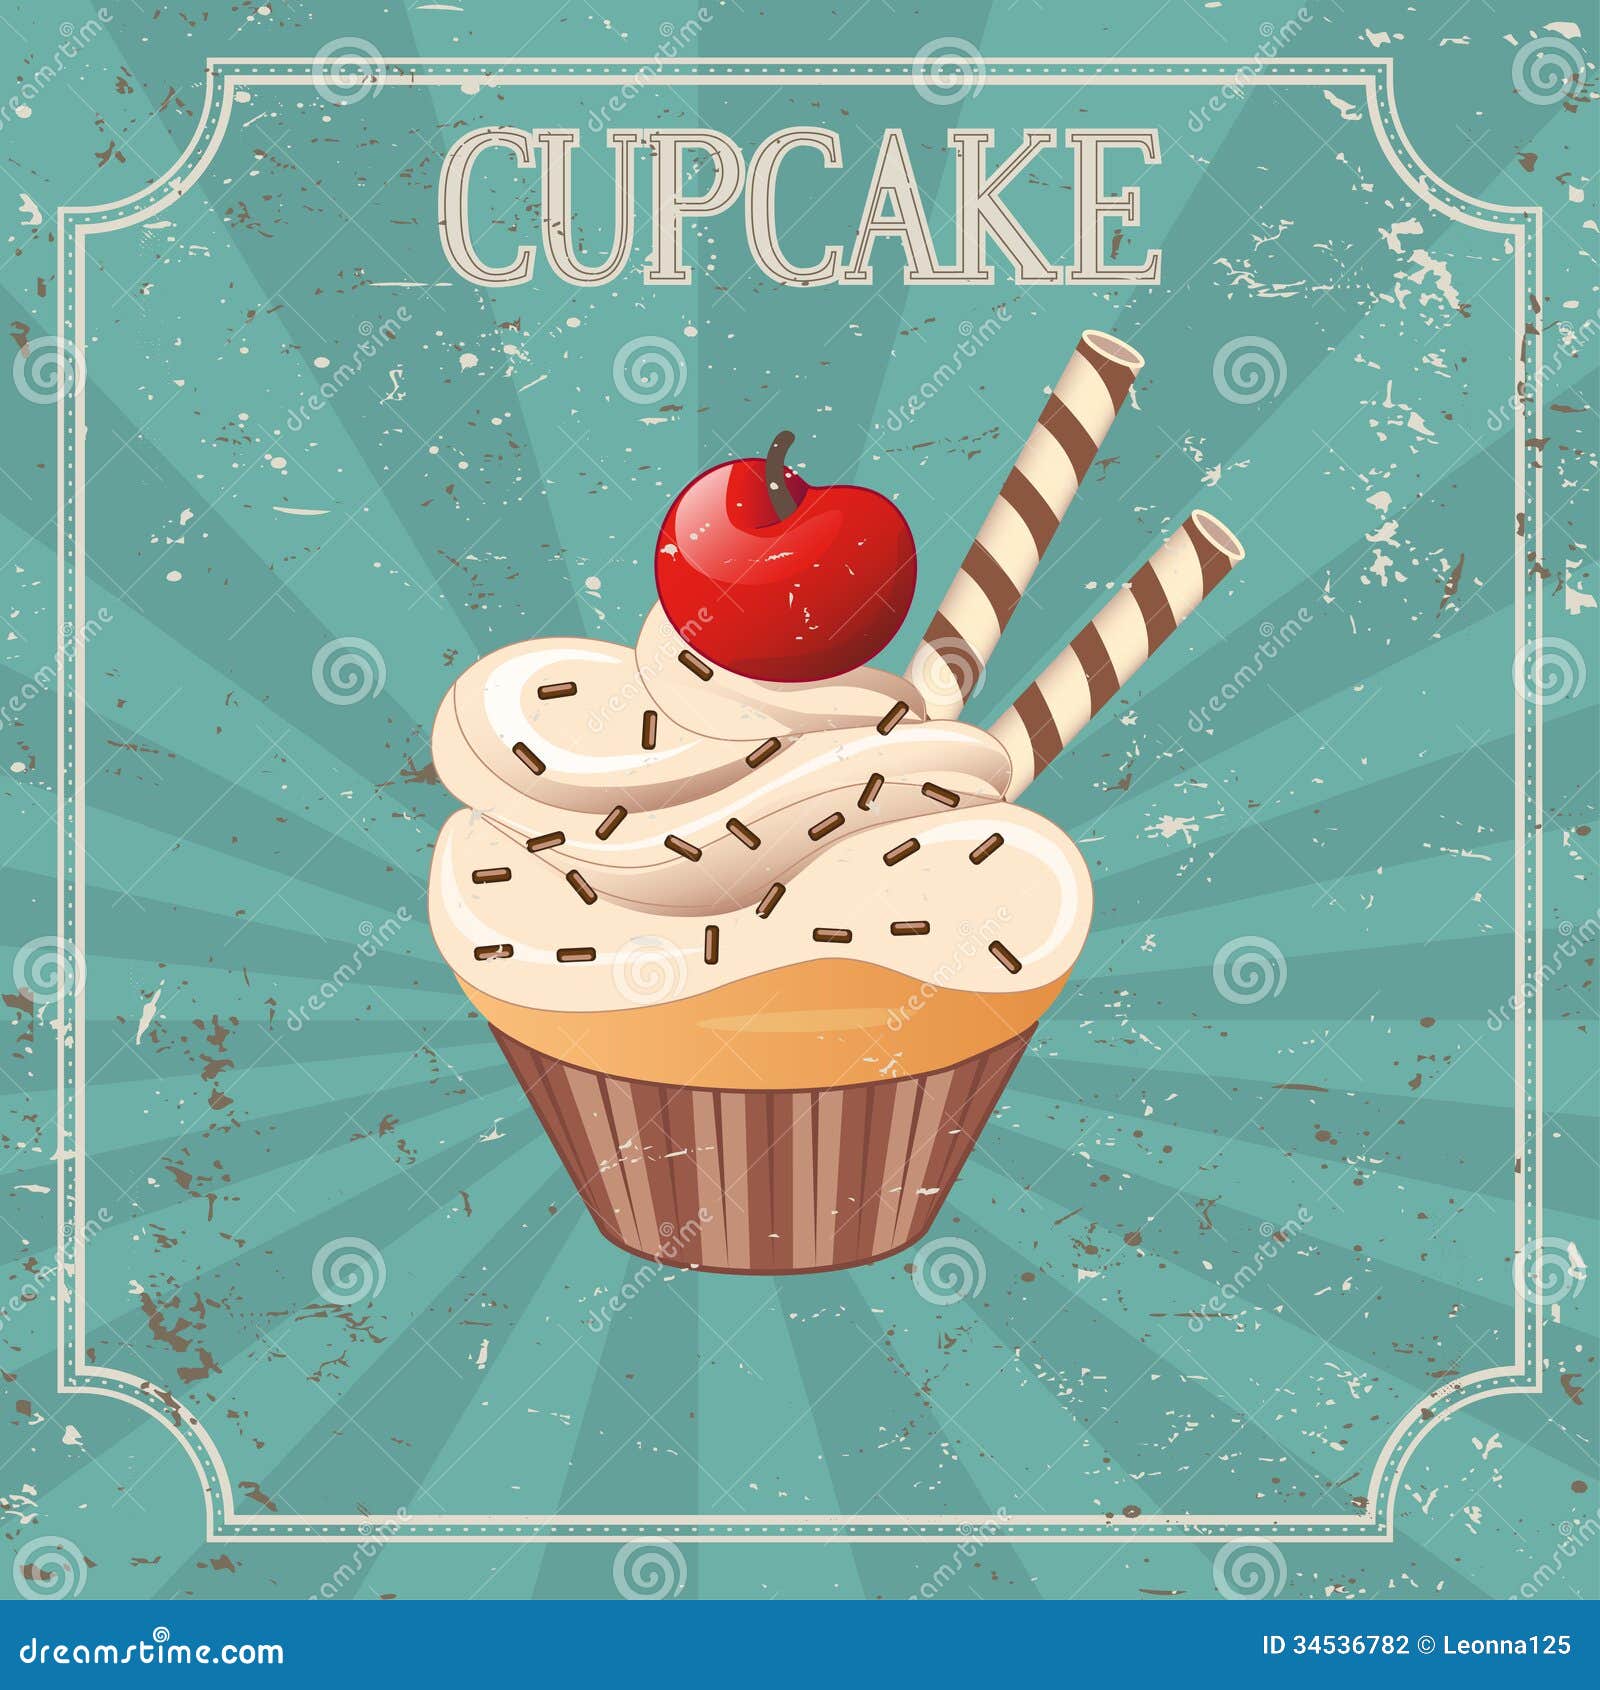 vintage clipart  On Cupcake Vintage Background Image Photography Illustration   Stock cupcake